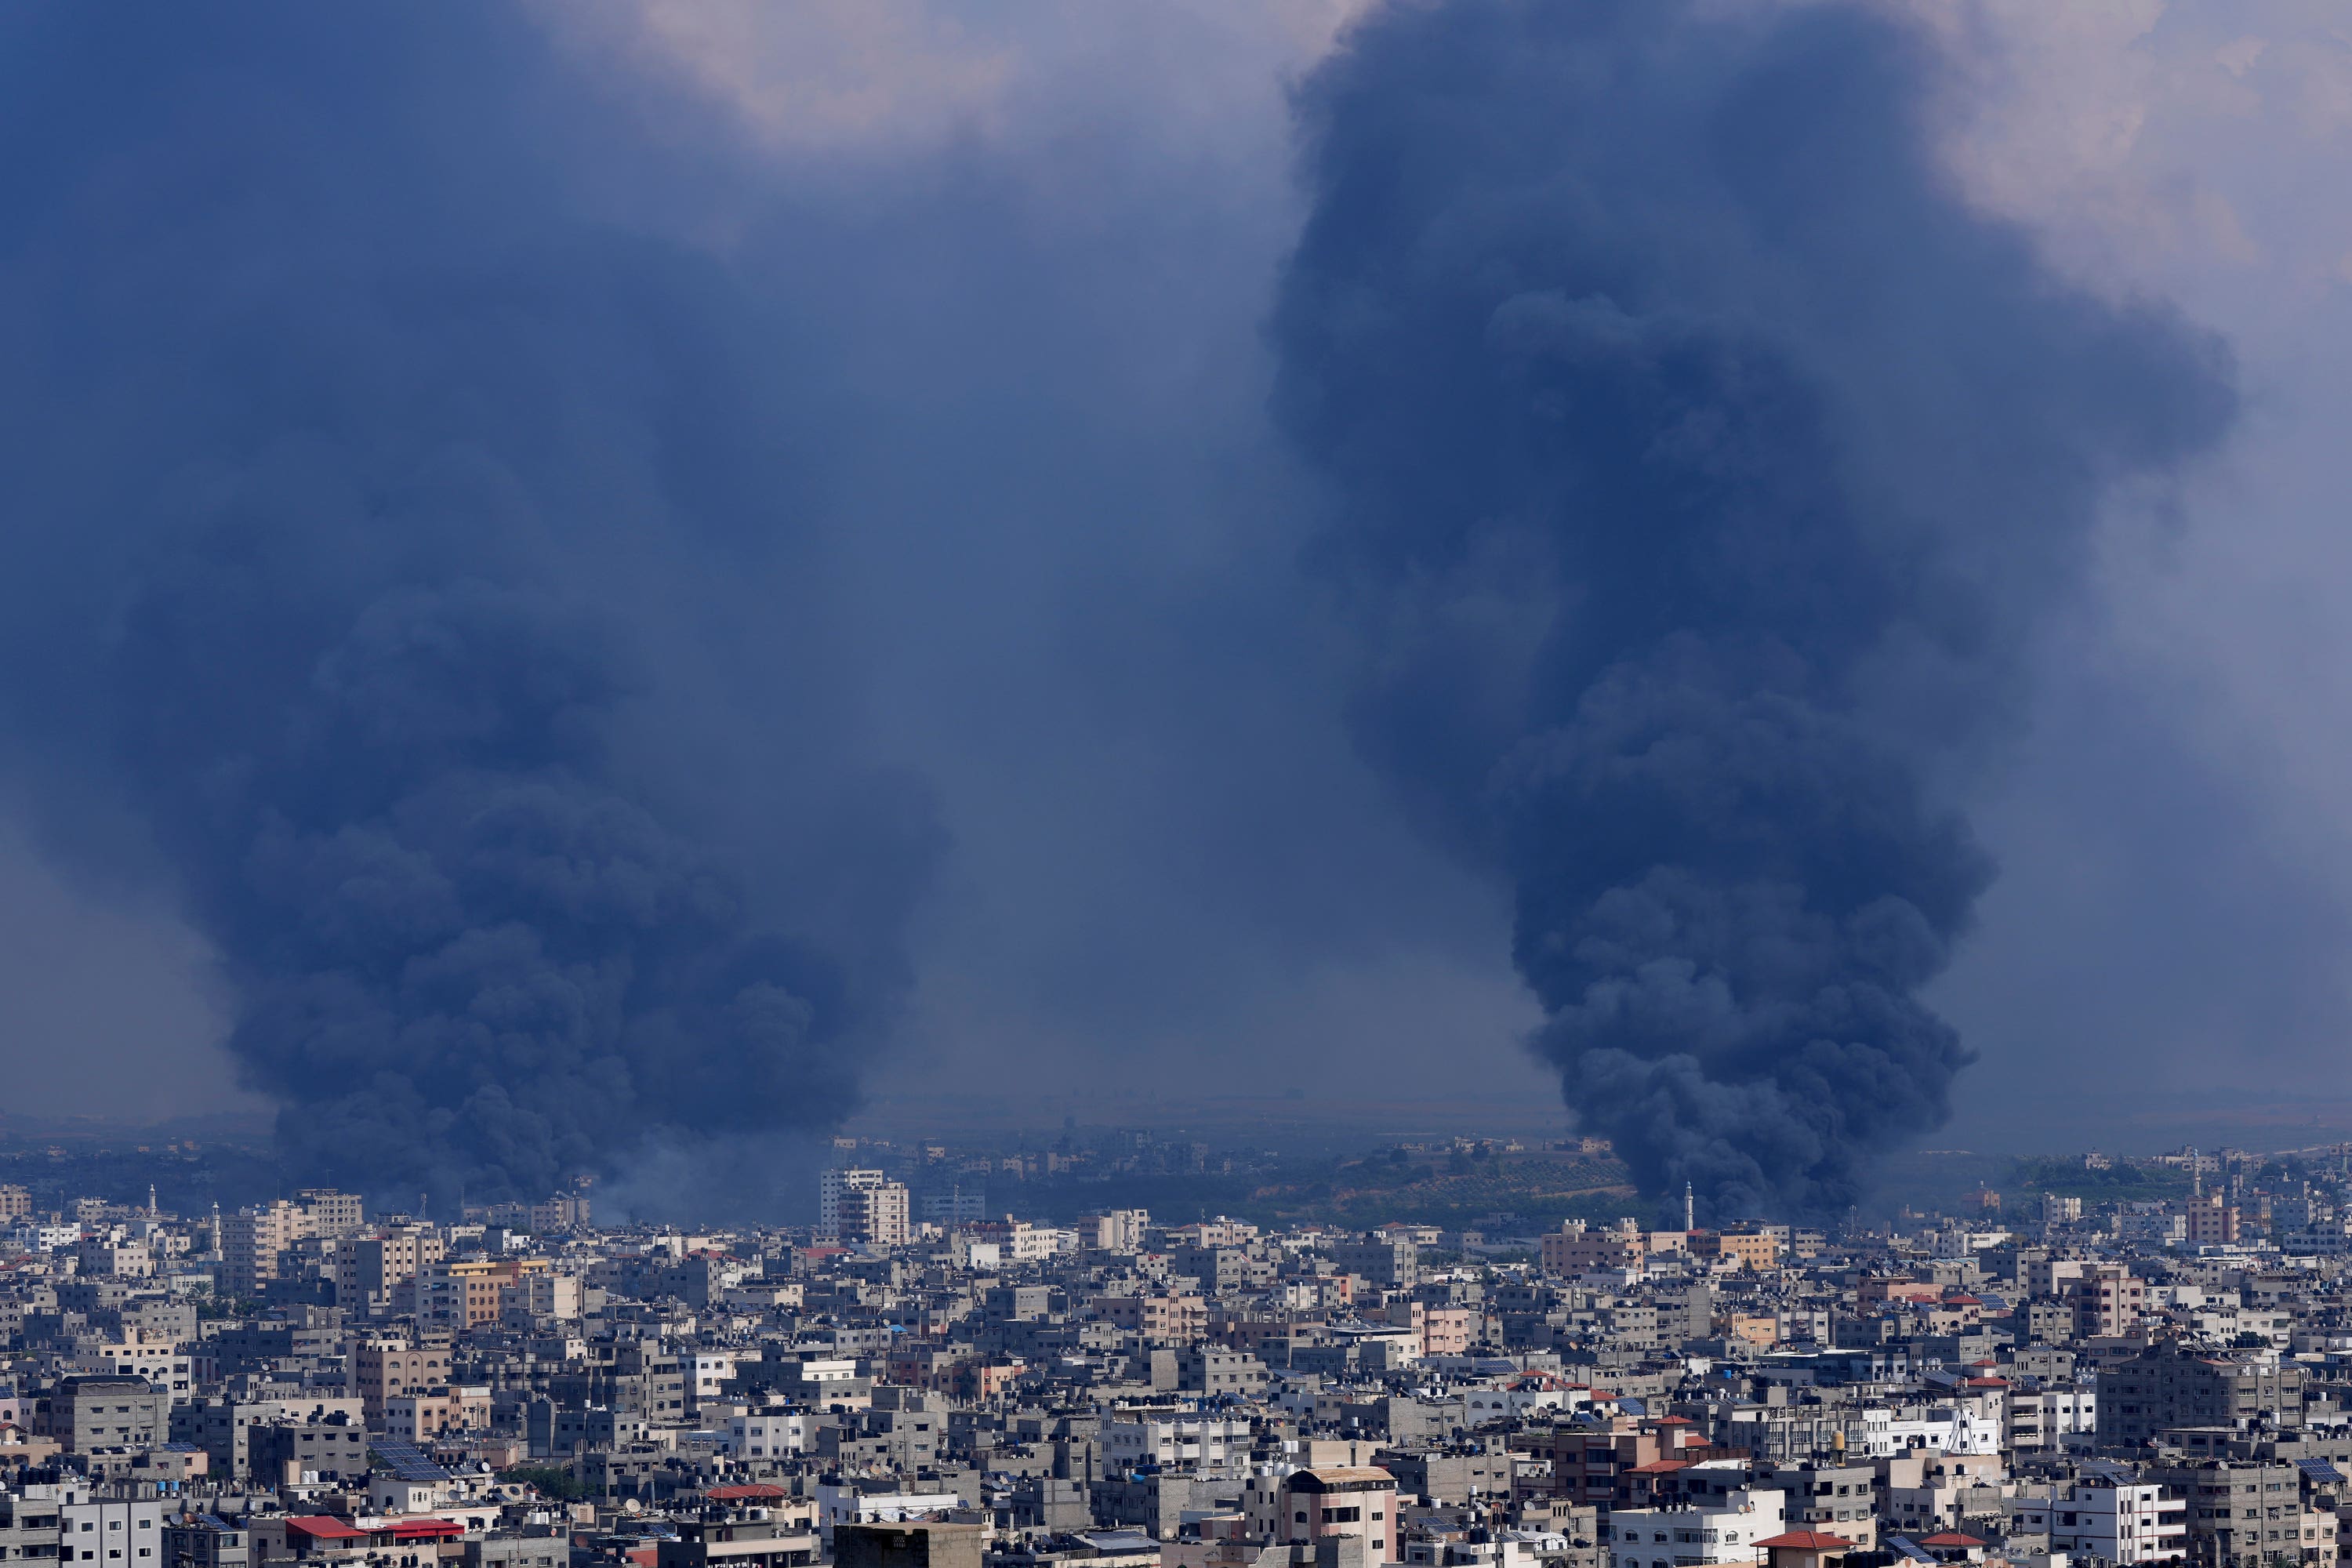 Gaza City was hit by Israeli airstrikes.